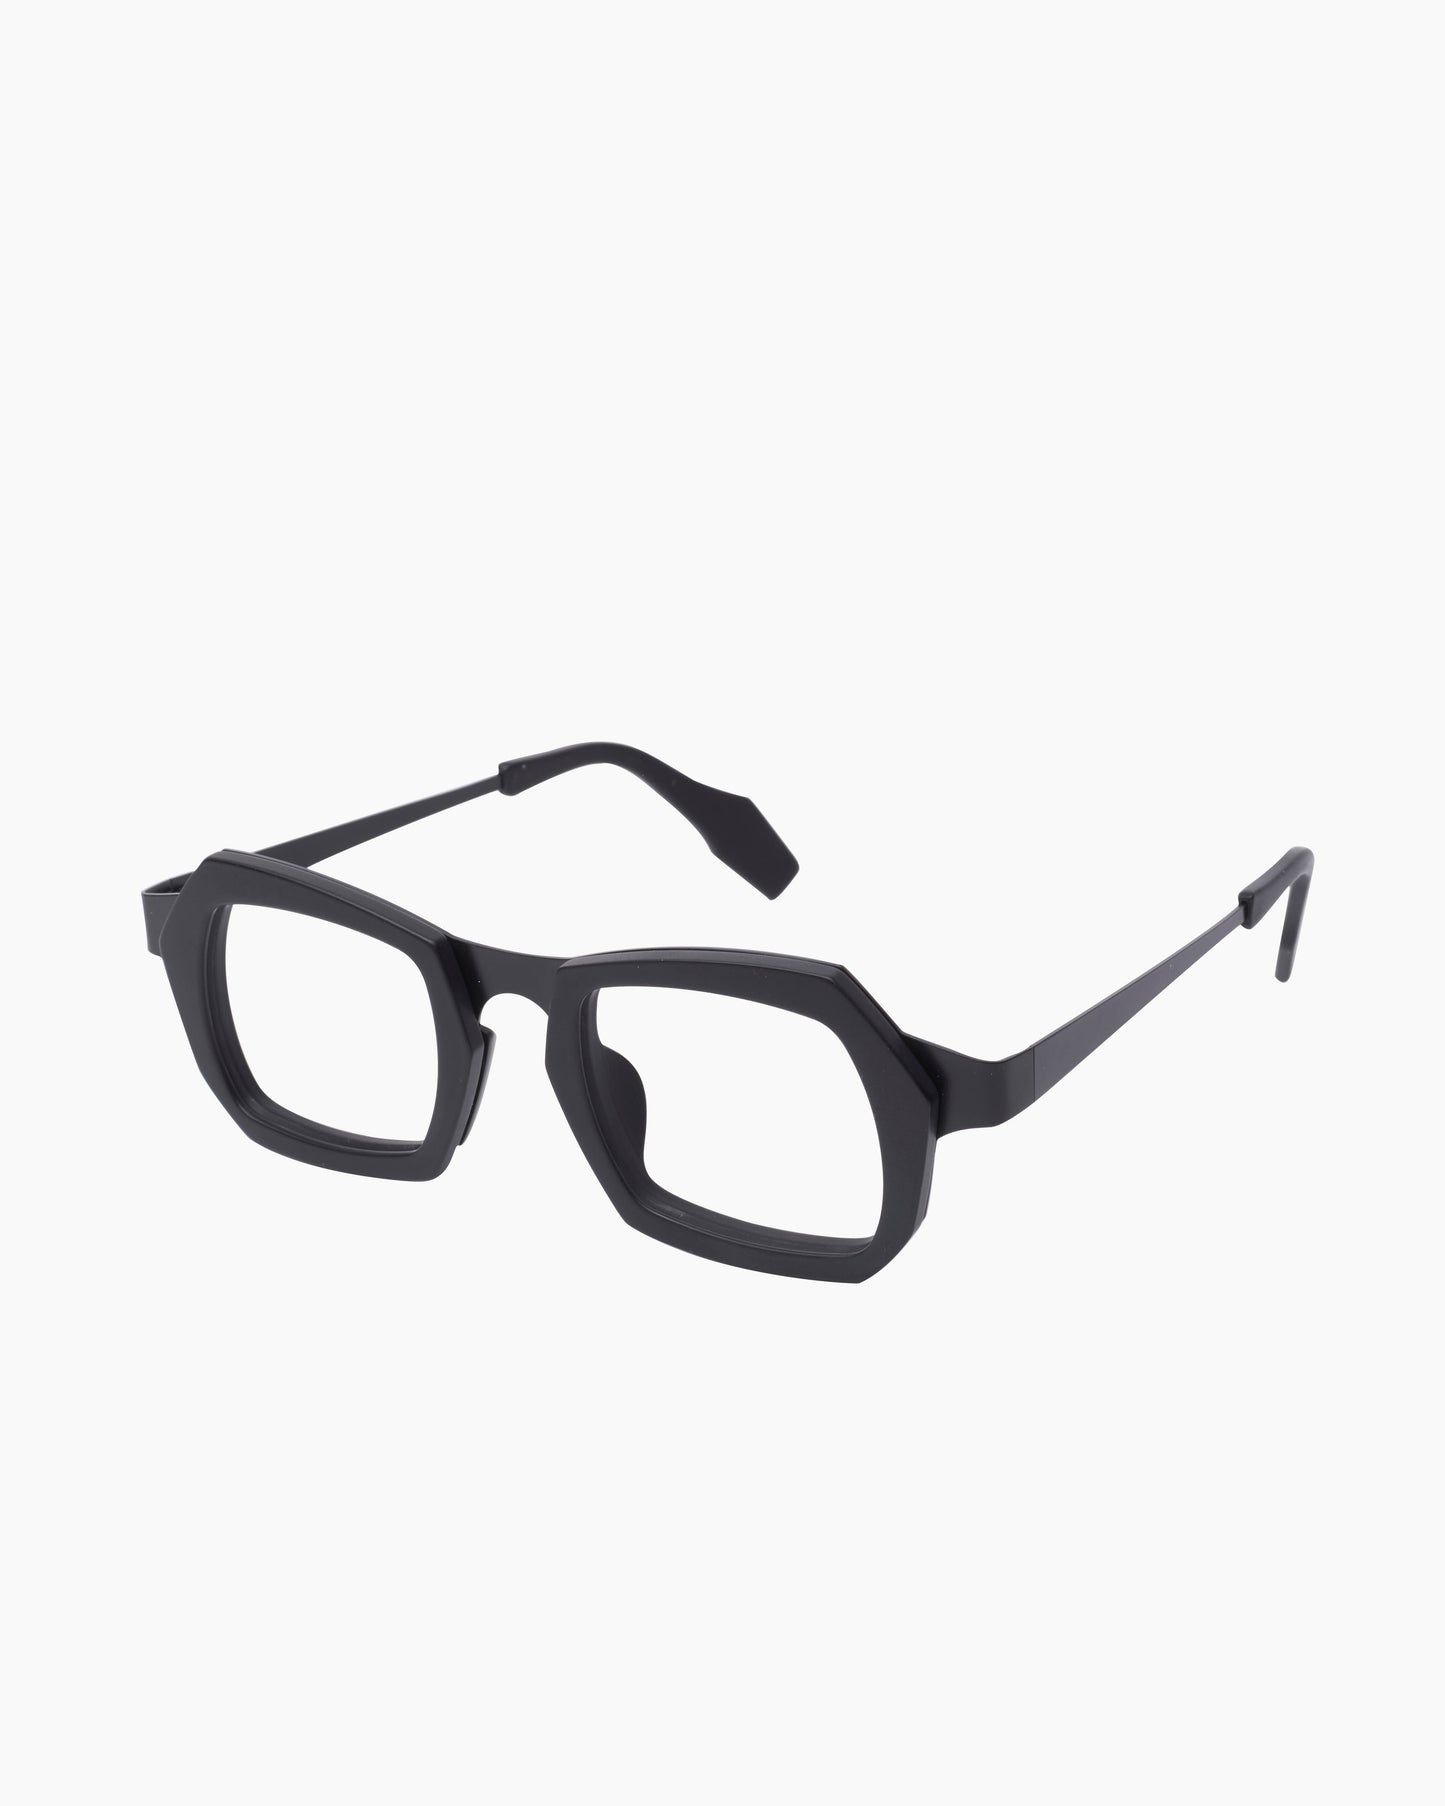 Theo - Santorini - 1 | glasses bar